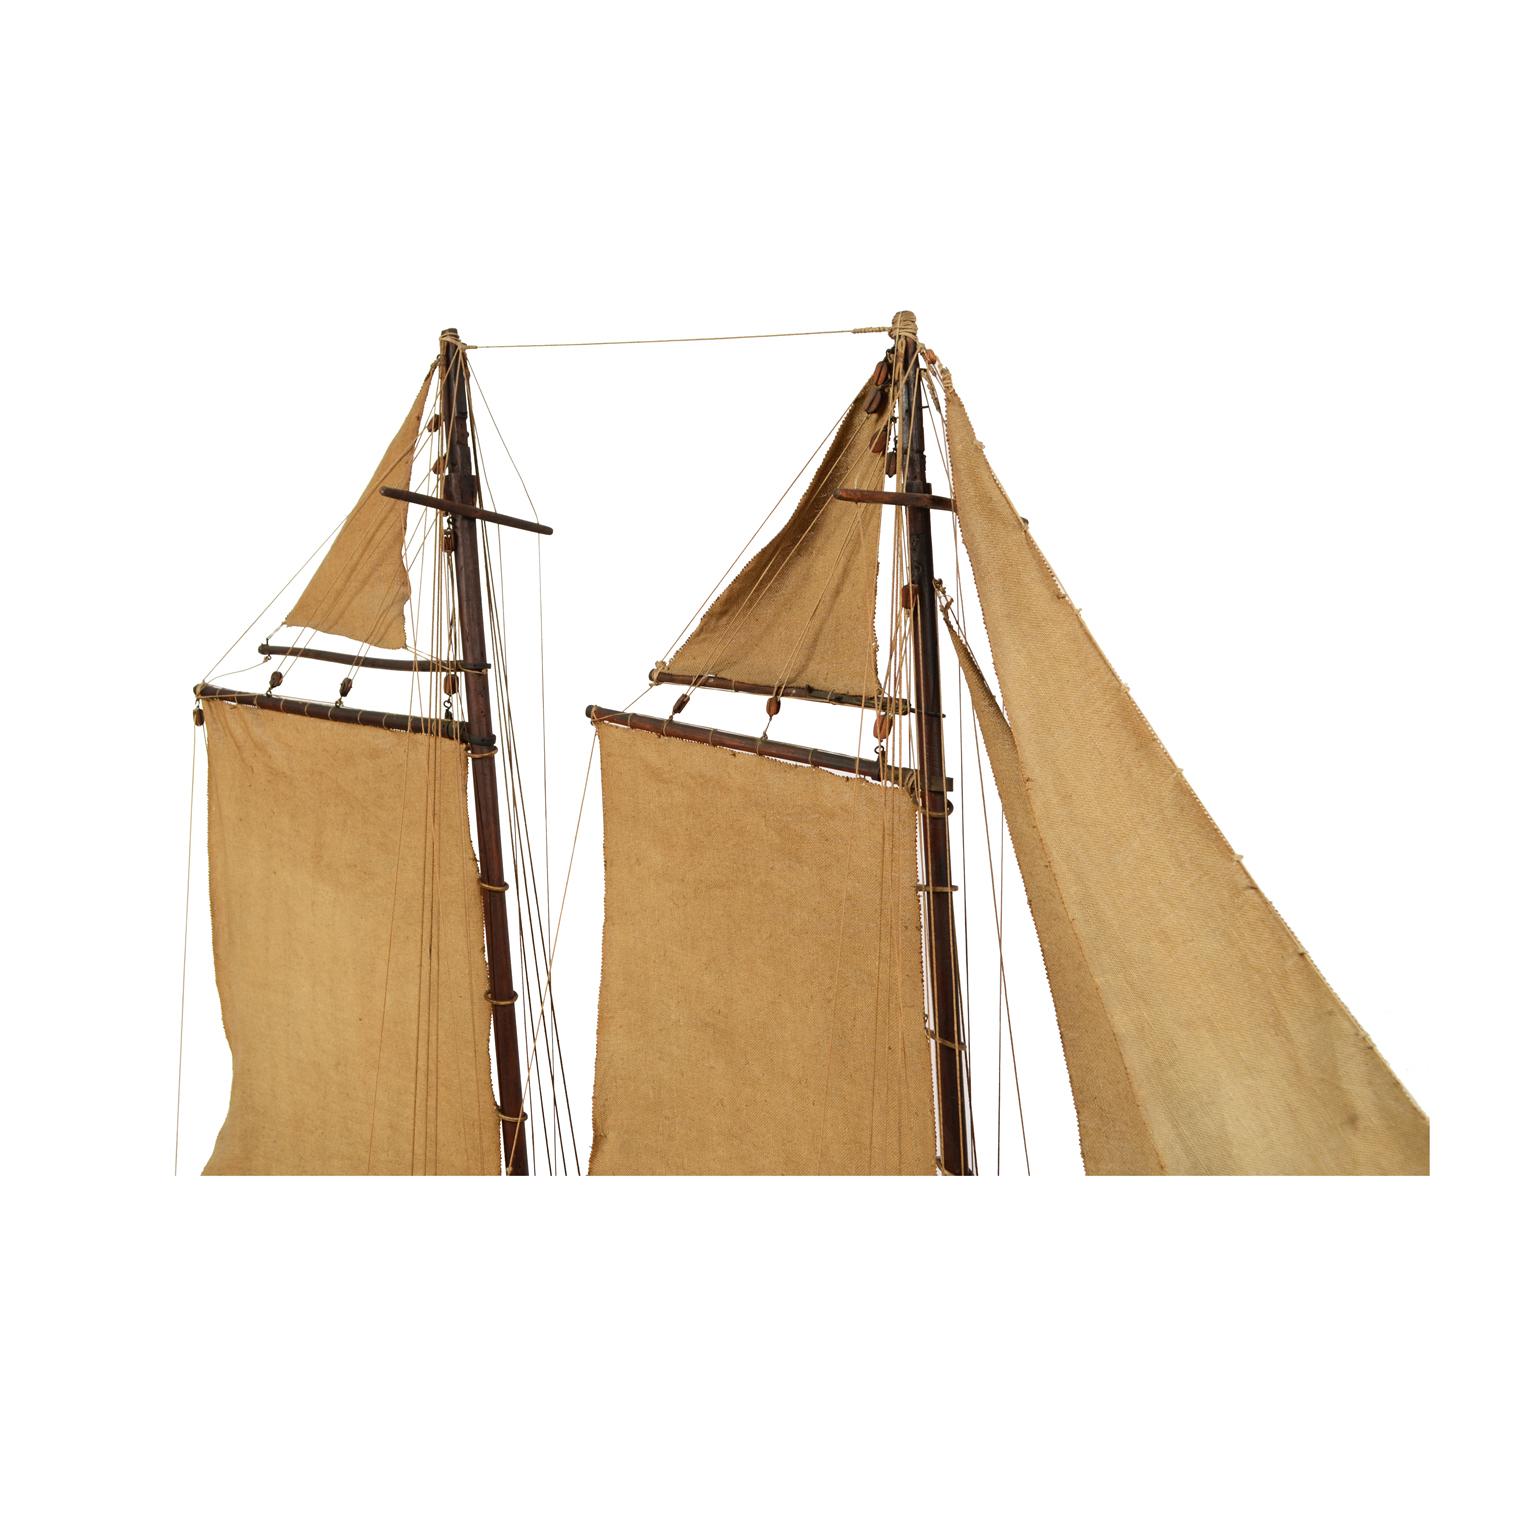 Vintage Wooden Sailing Model of a Schooner, Early 1900s 7